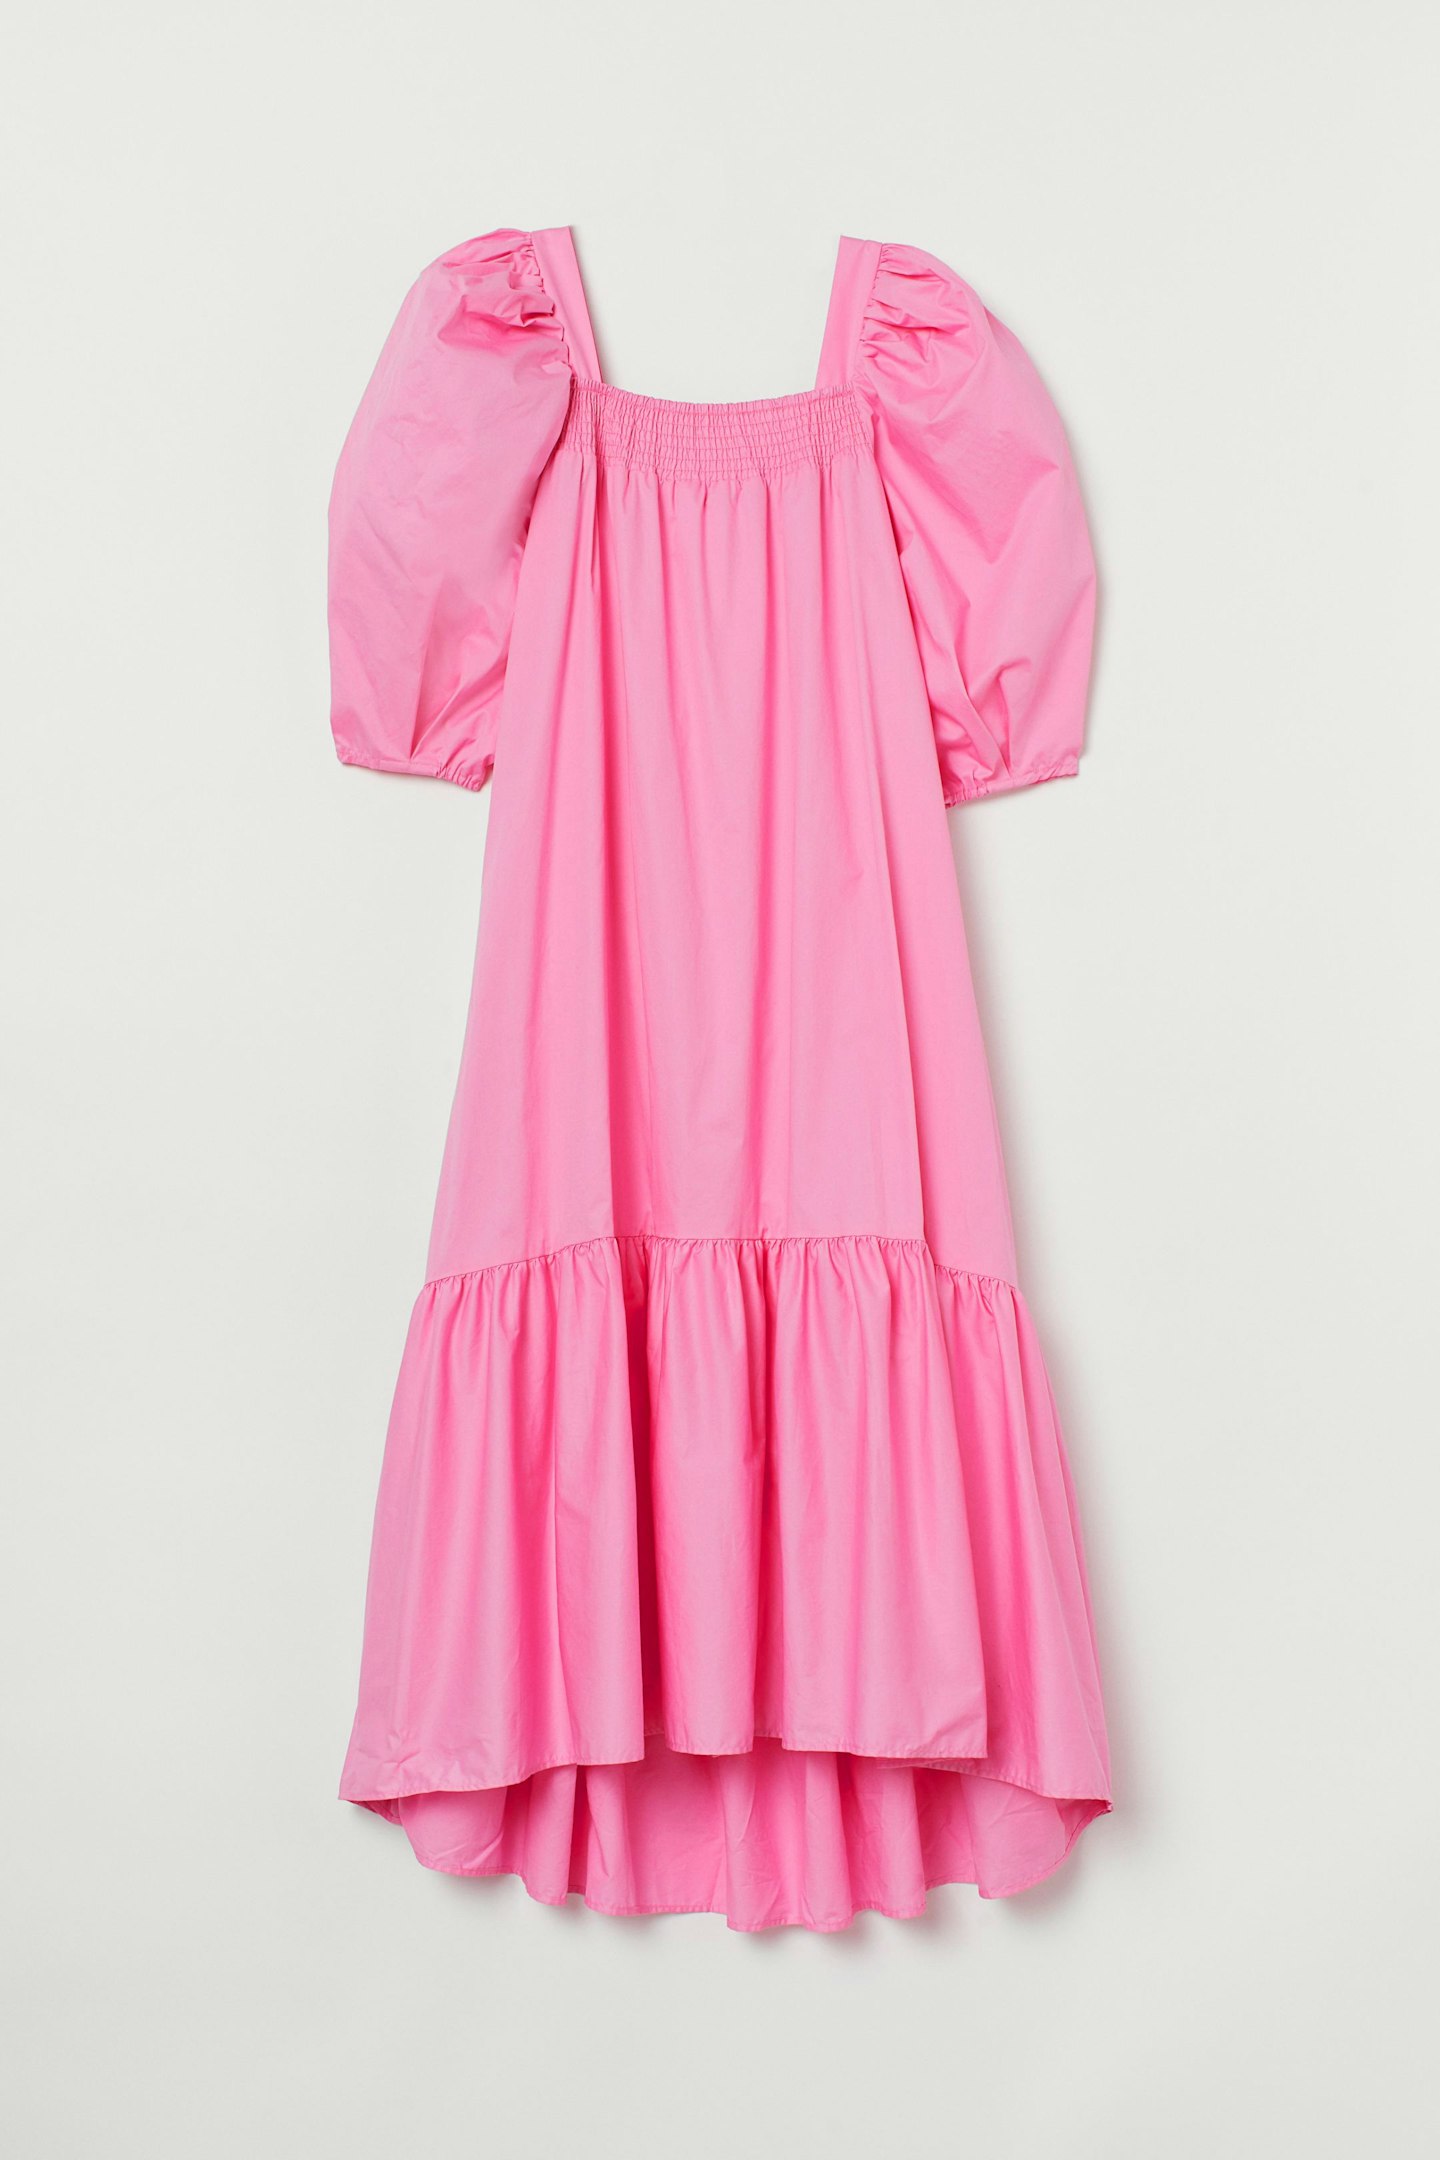 H&M, Puff-sleeved cotton dress, £19.99